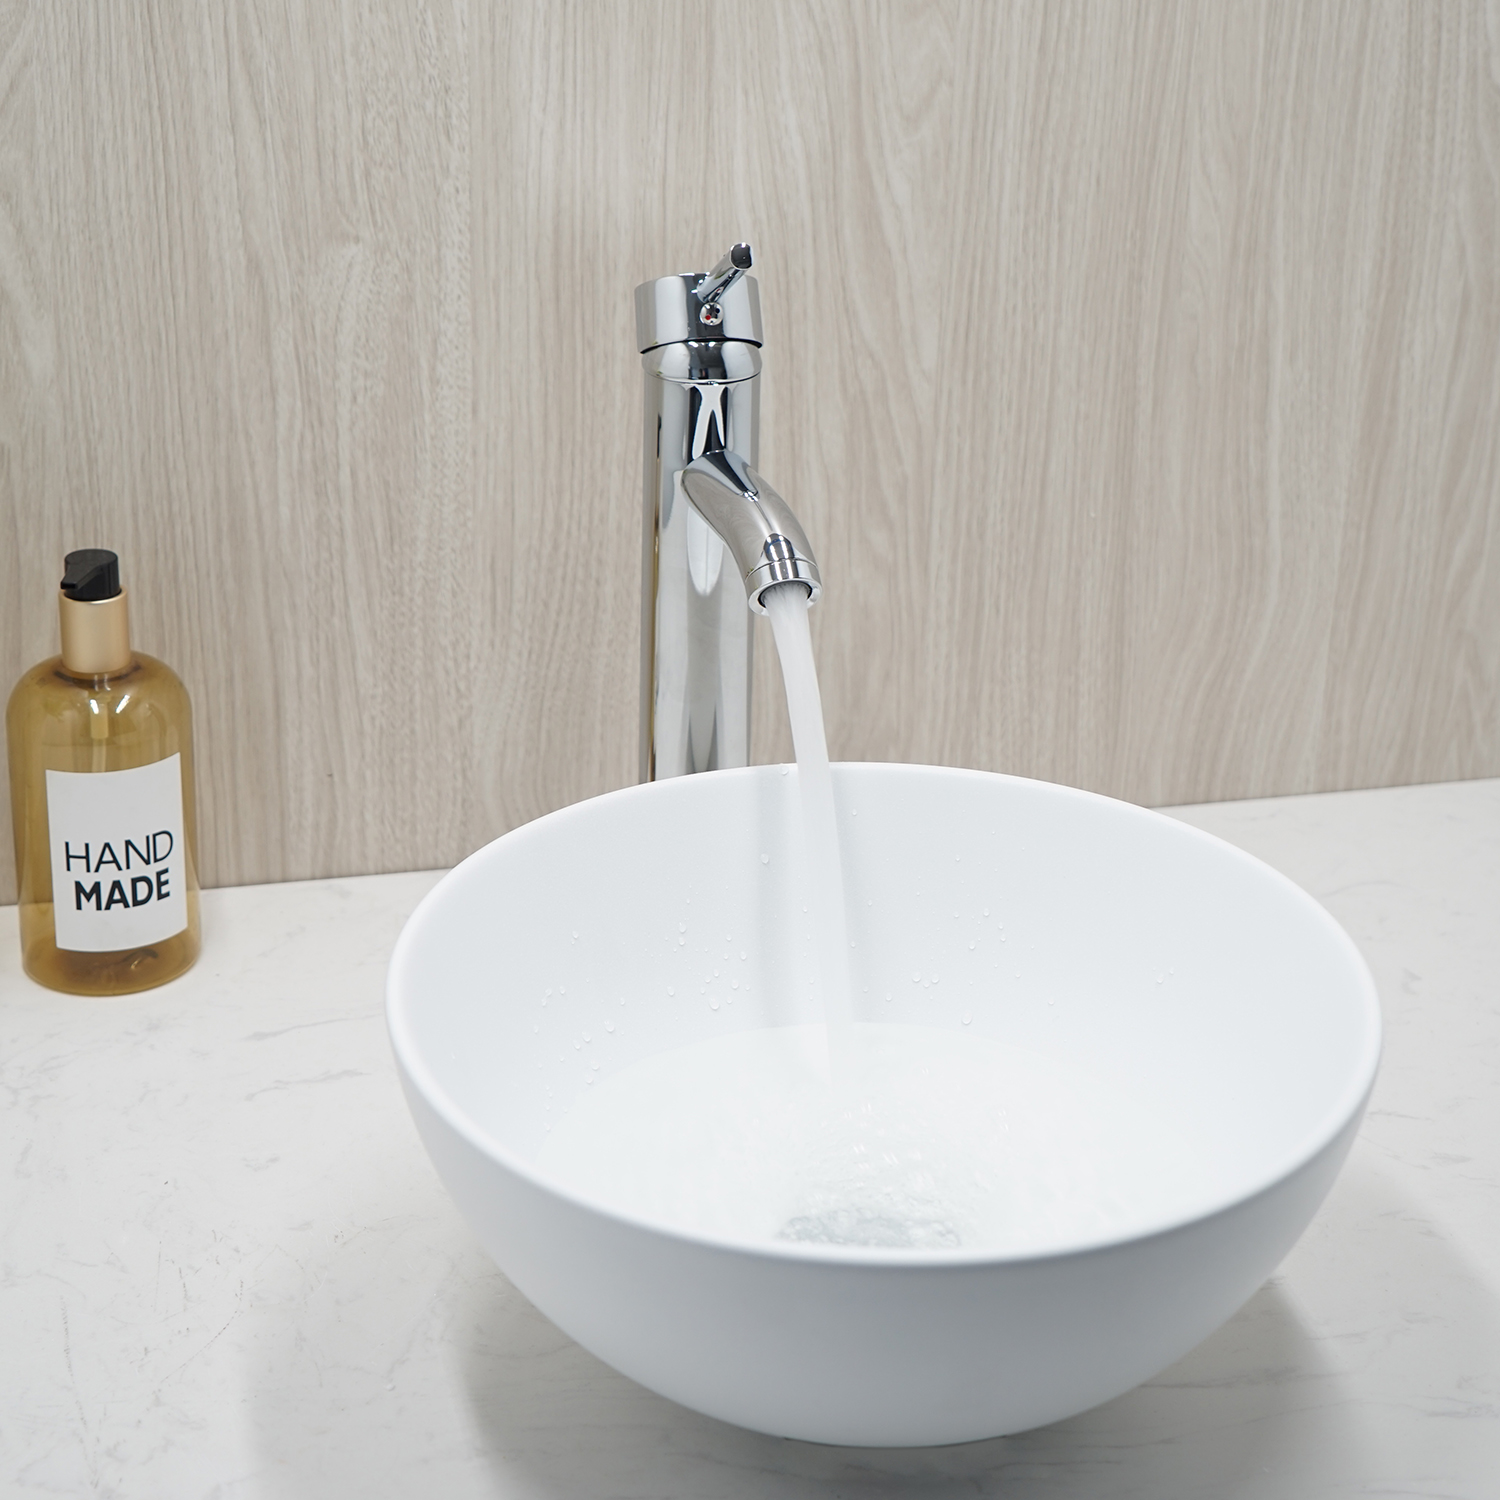 JIENI Black & White Ceramic Washbasin Vessel Lavatory Basin Bathroom Sink Bath Combine Deck Mounted Brass Faucet Mixers & Taps